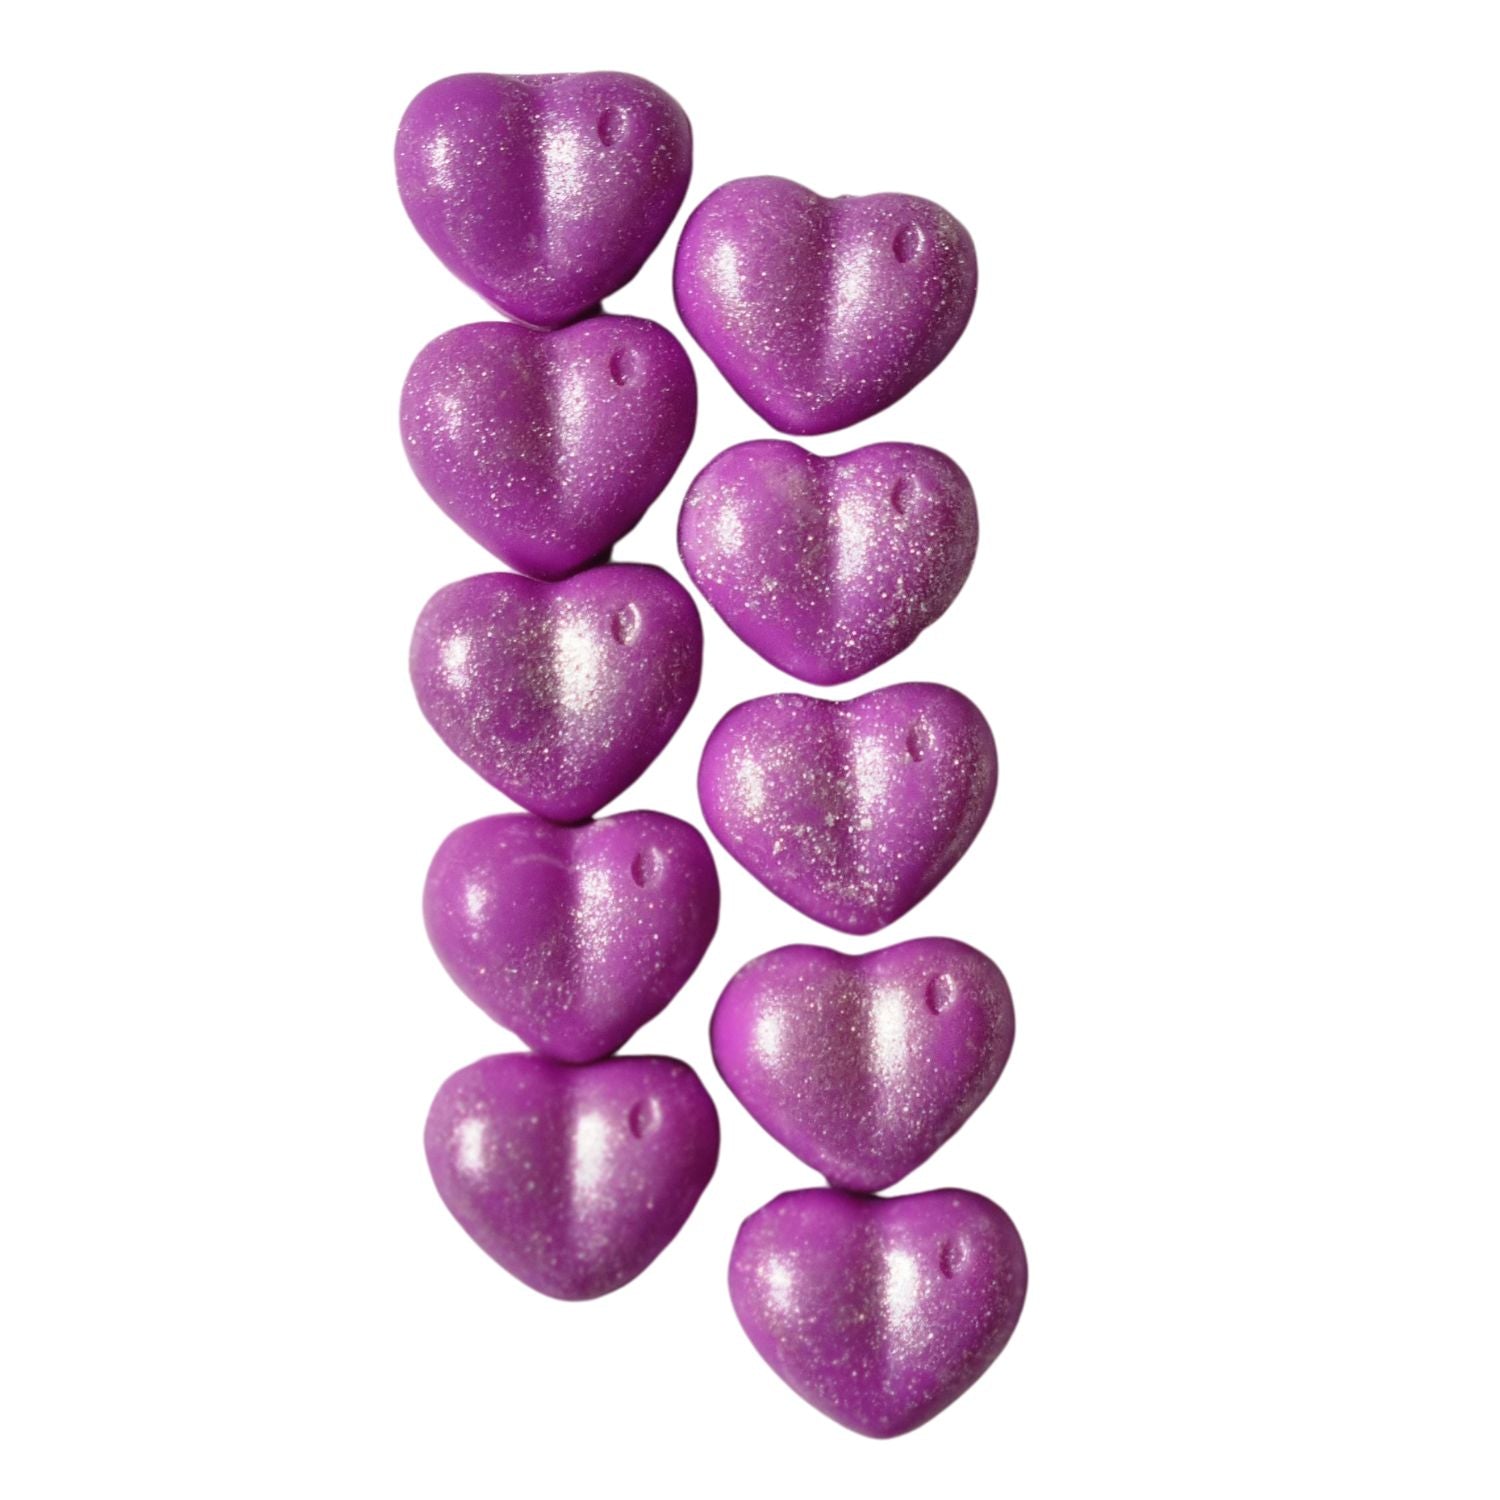 ten bright pink heart shaped soy wax melts